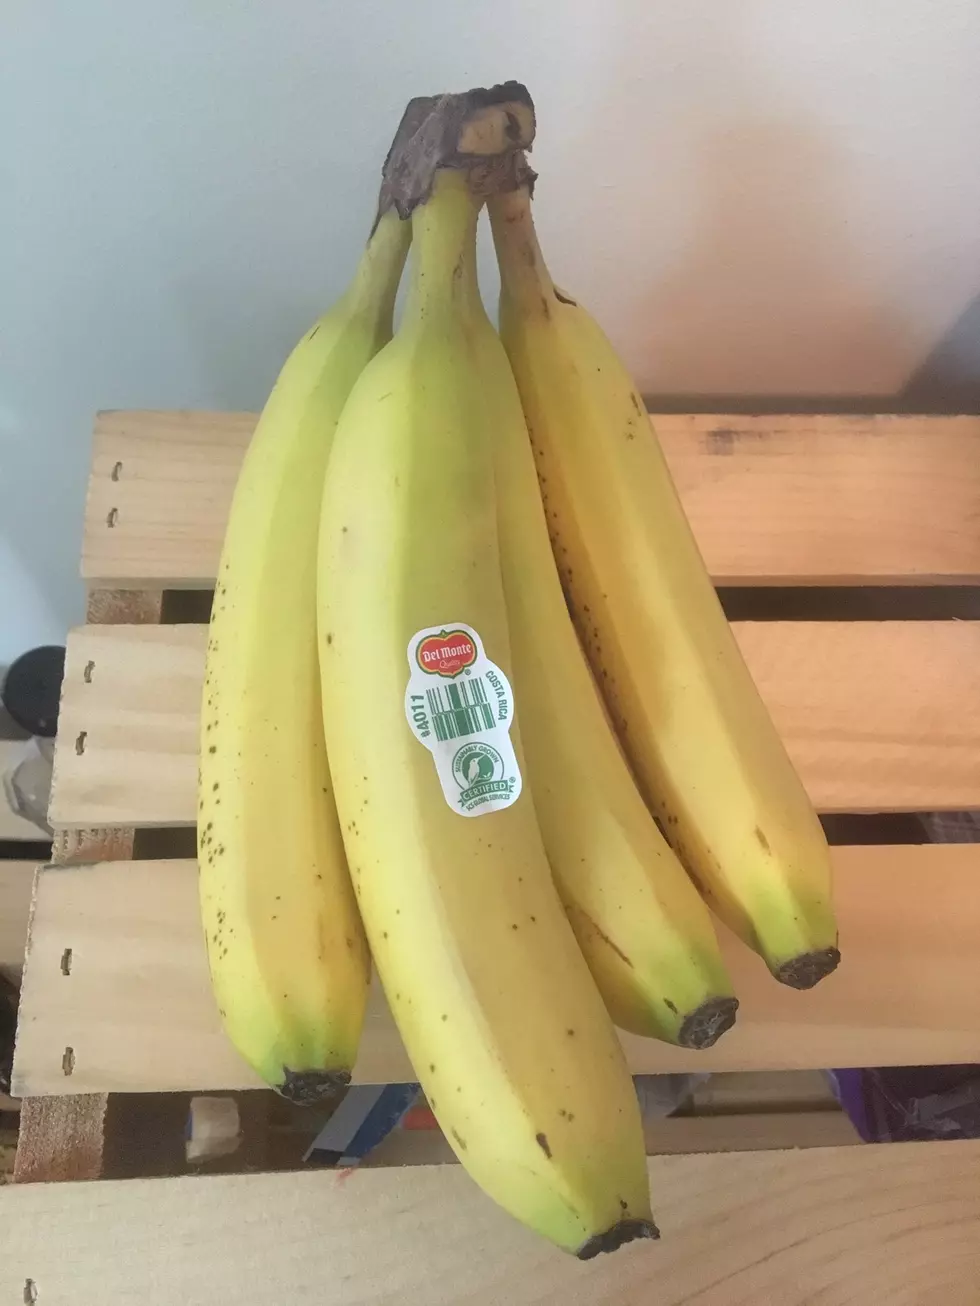 Five Ways People In Rochester Handle Bananas Having a Short Shelf Life